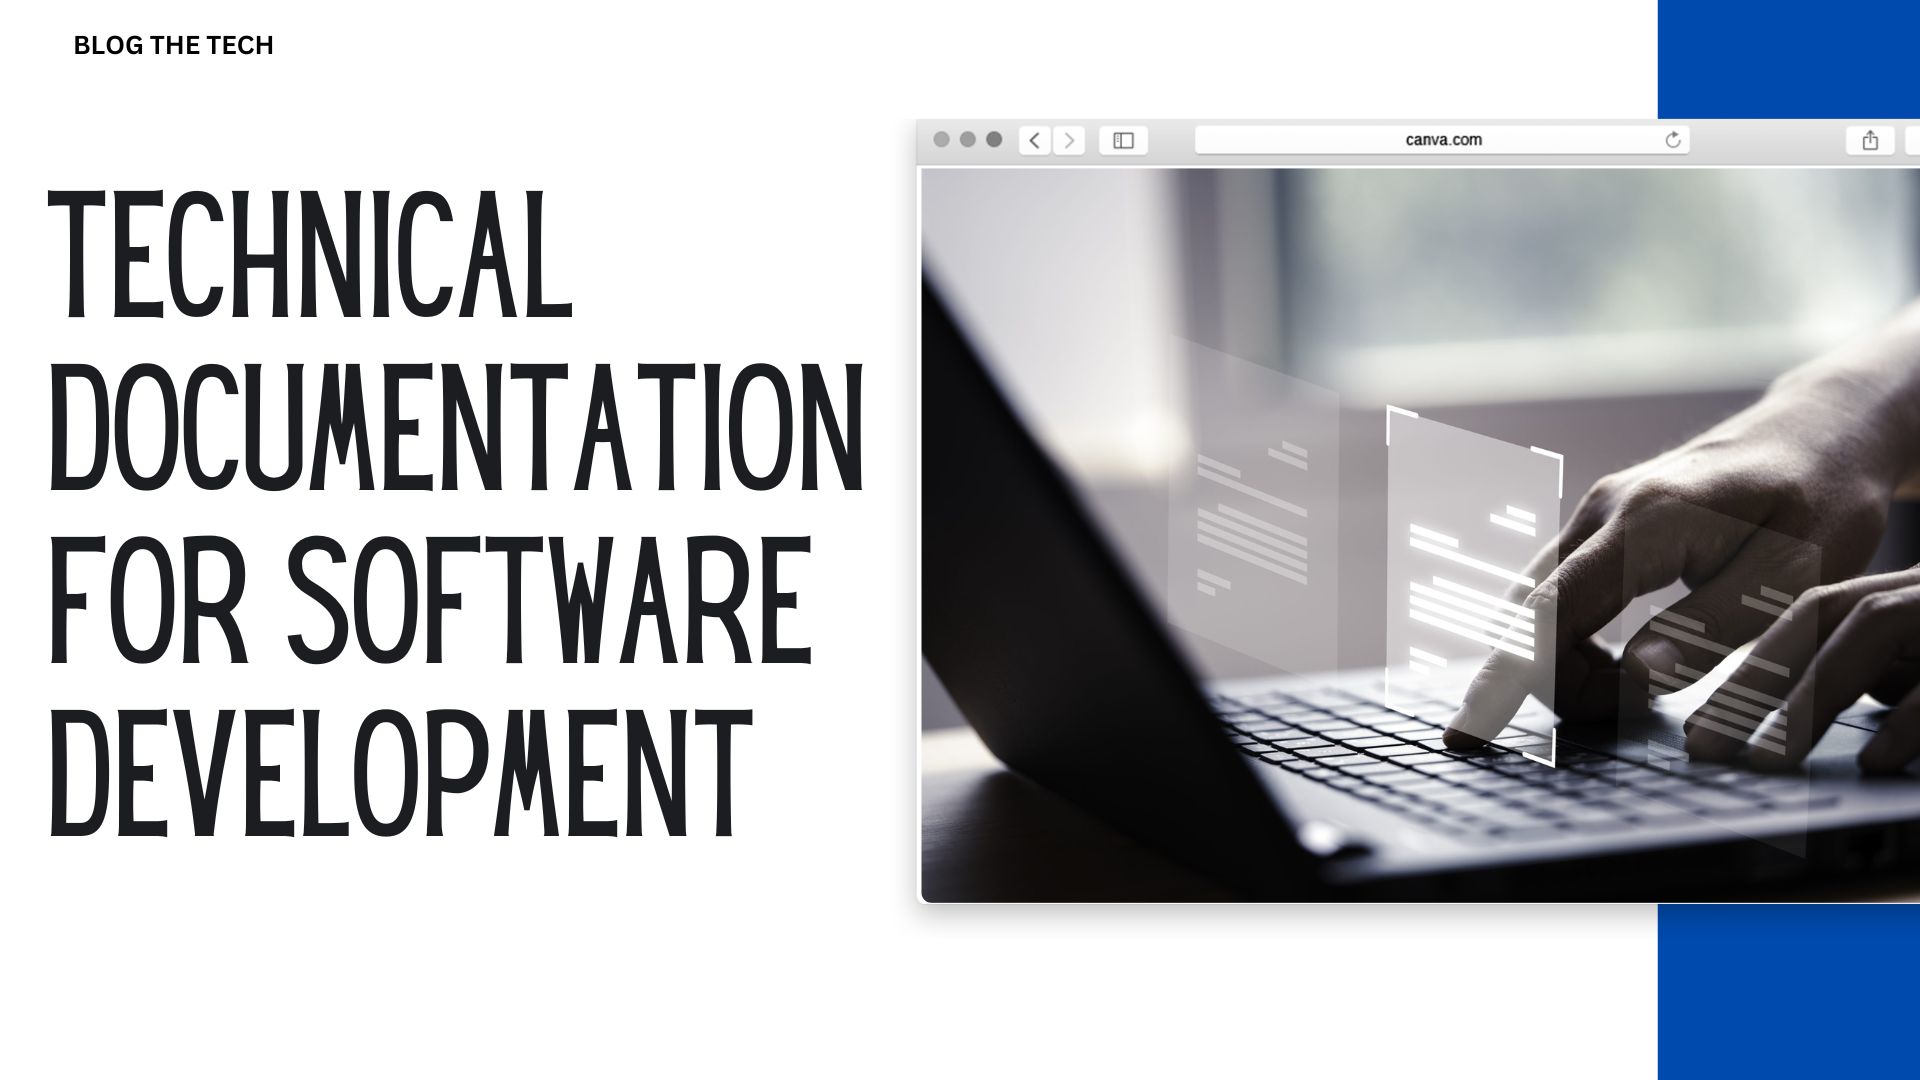 Technical documentation for software development